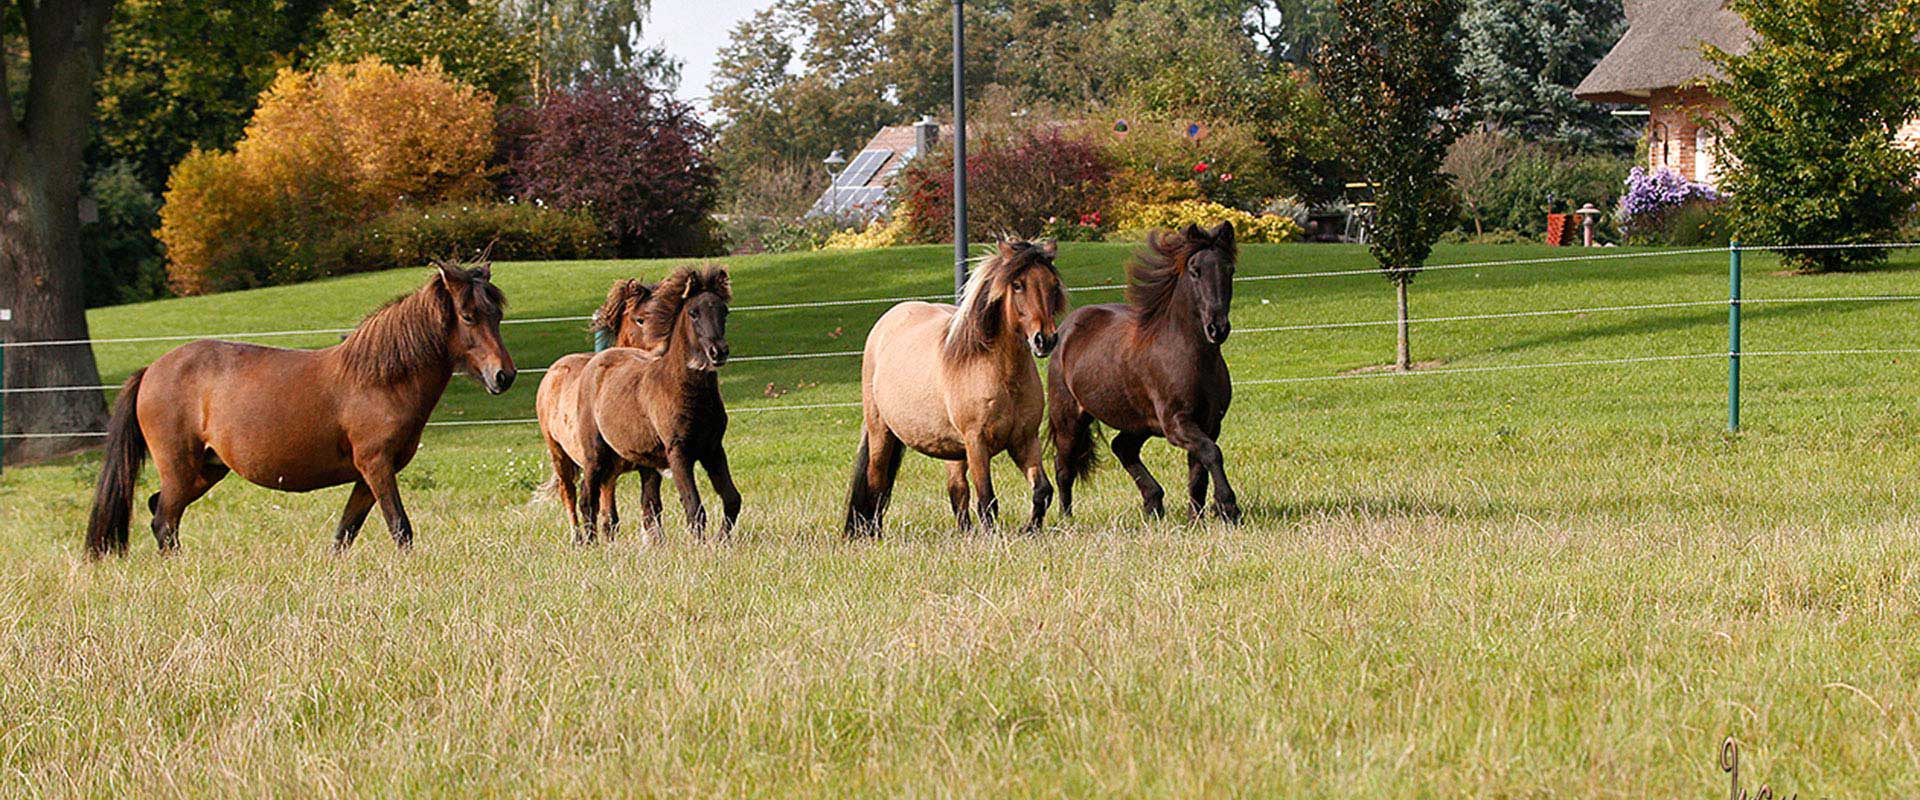 Island-Pferde auf Gestüt Schloßberg